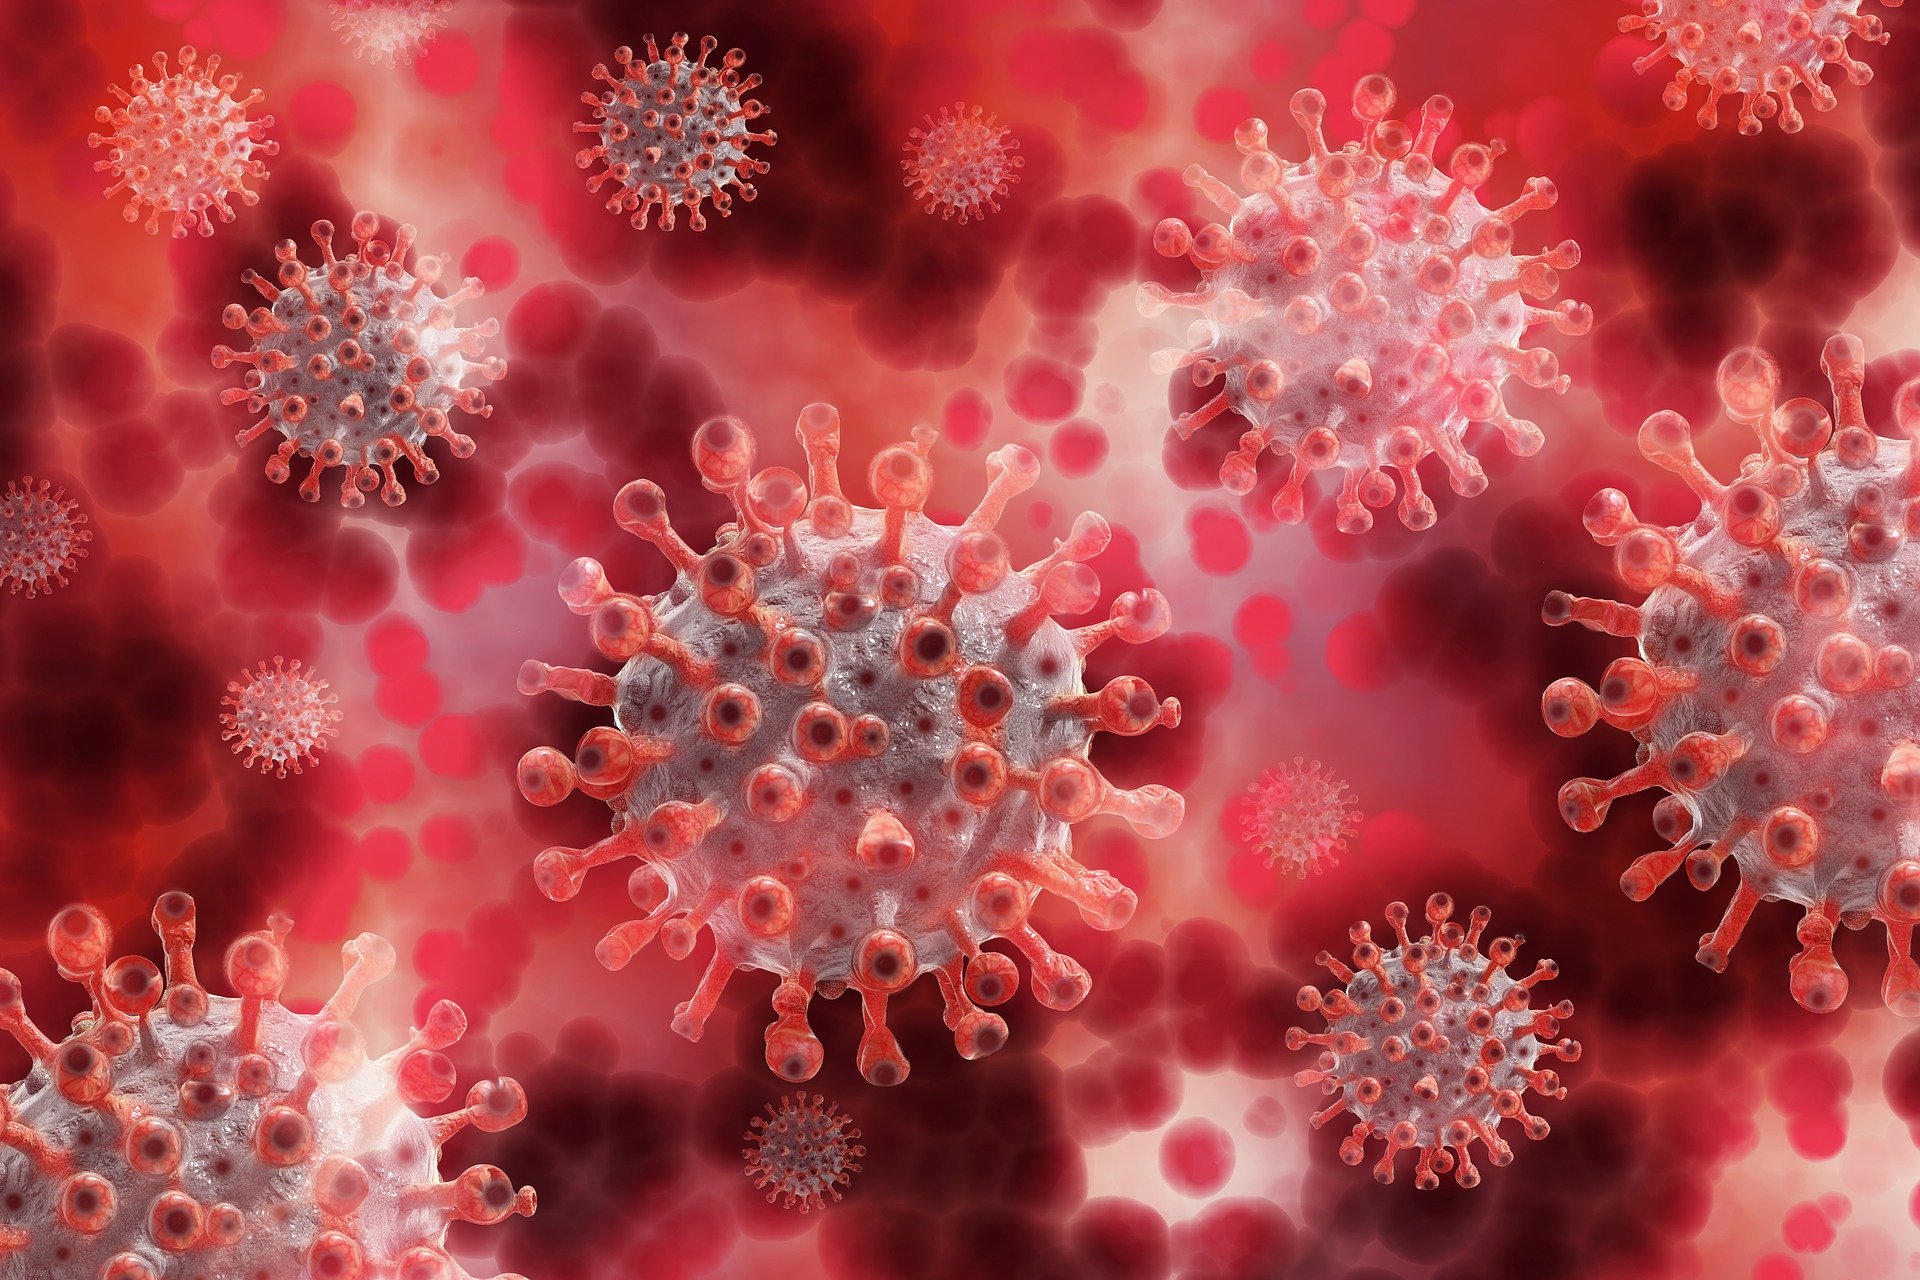 Coronavirus in Toscana impennata di nuovi casi: 1.374 nuovi casi, età media 44 anni. 14 decessi